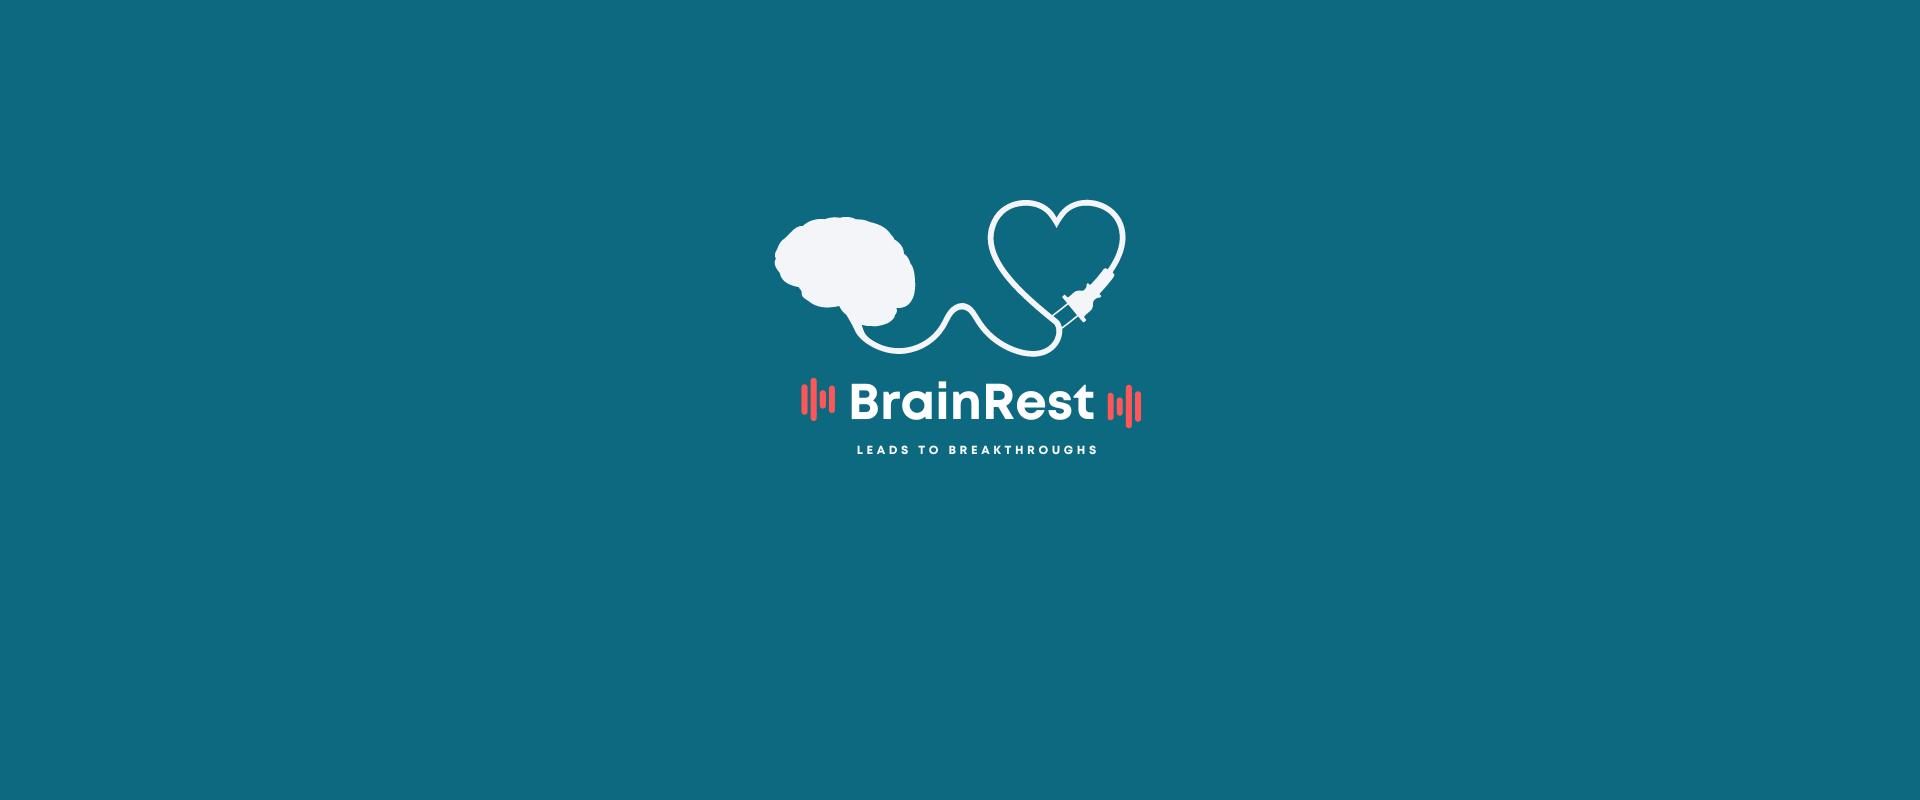 Brain Rest work anxiety stress #1 way to reverse stress